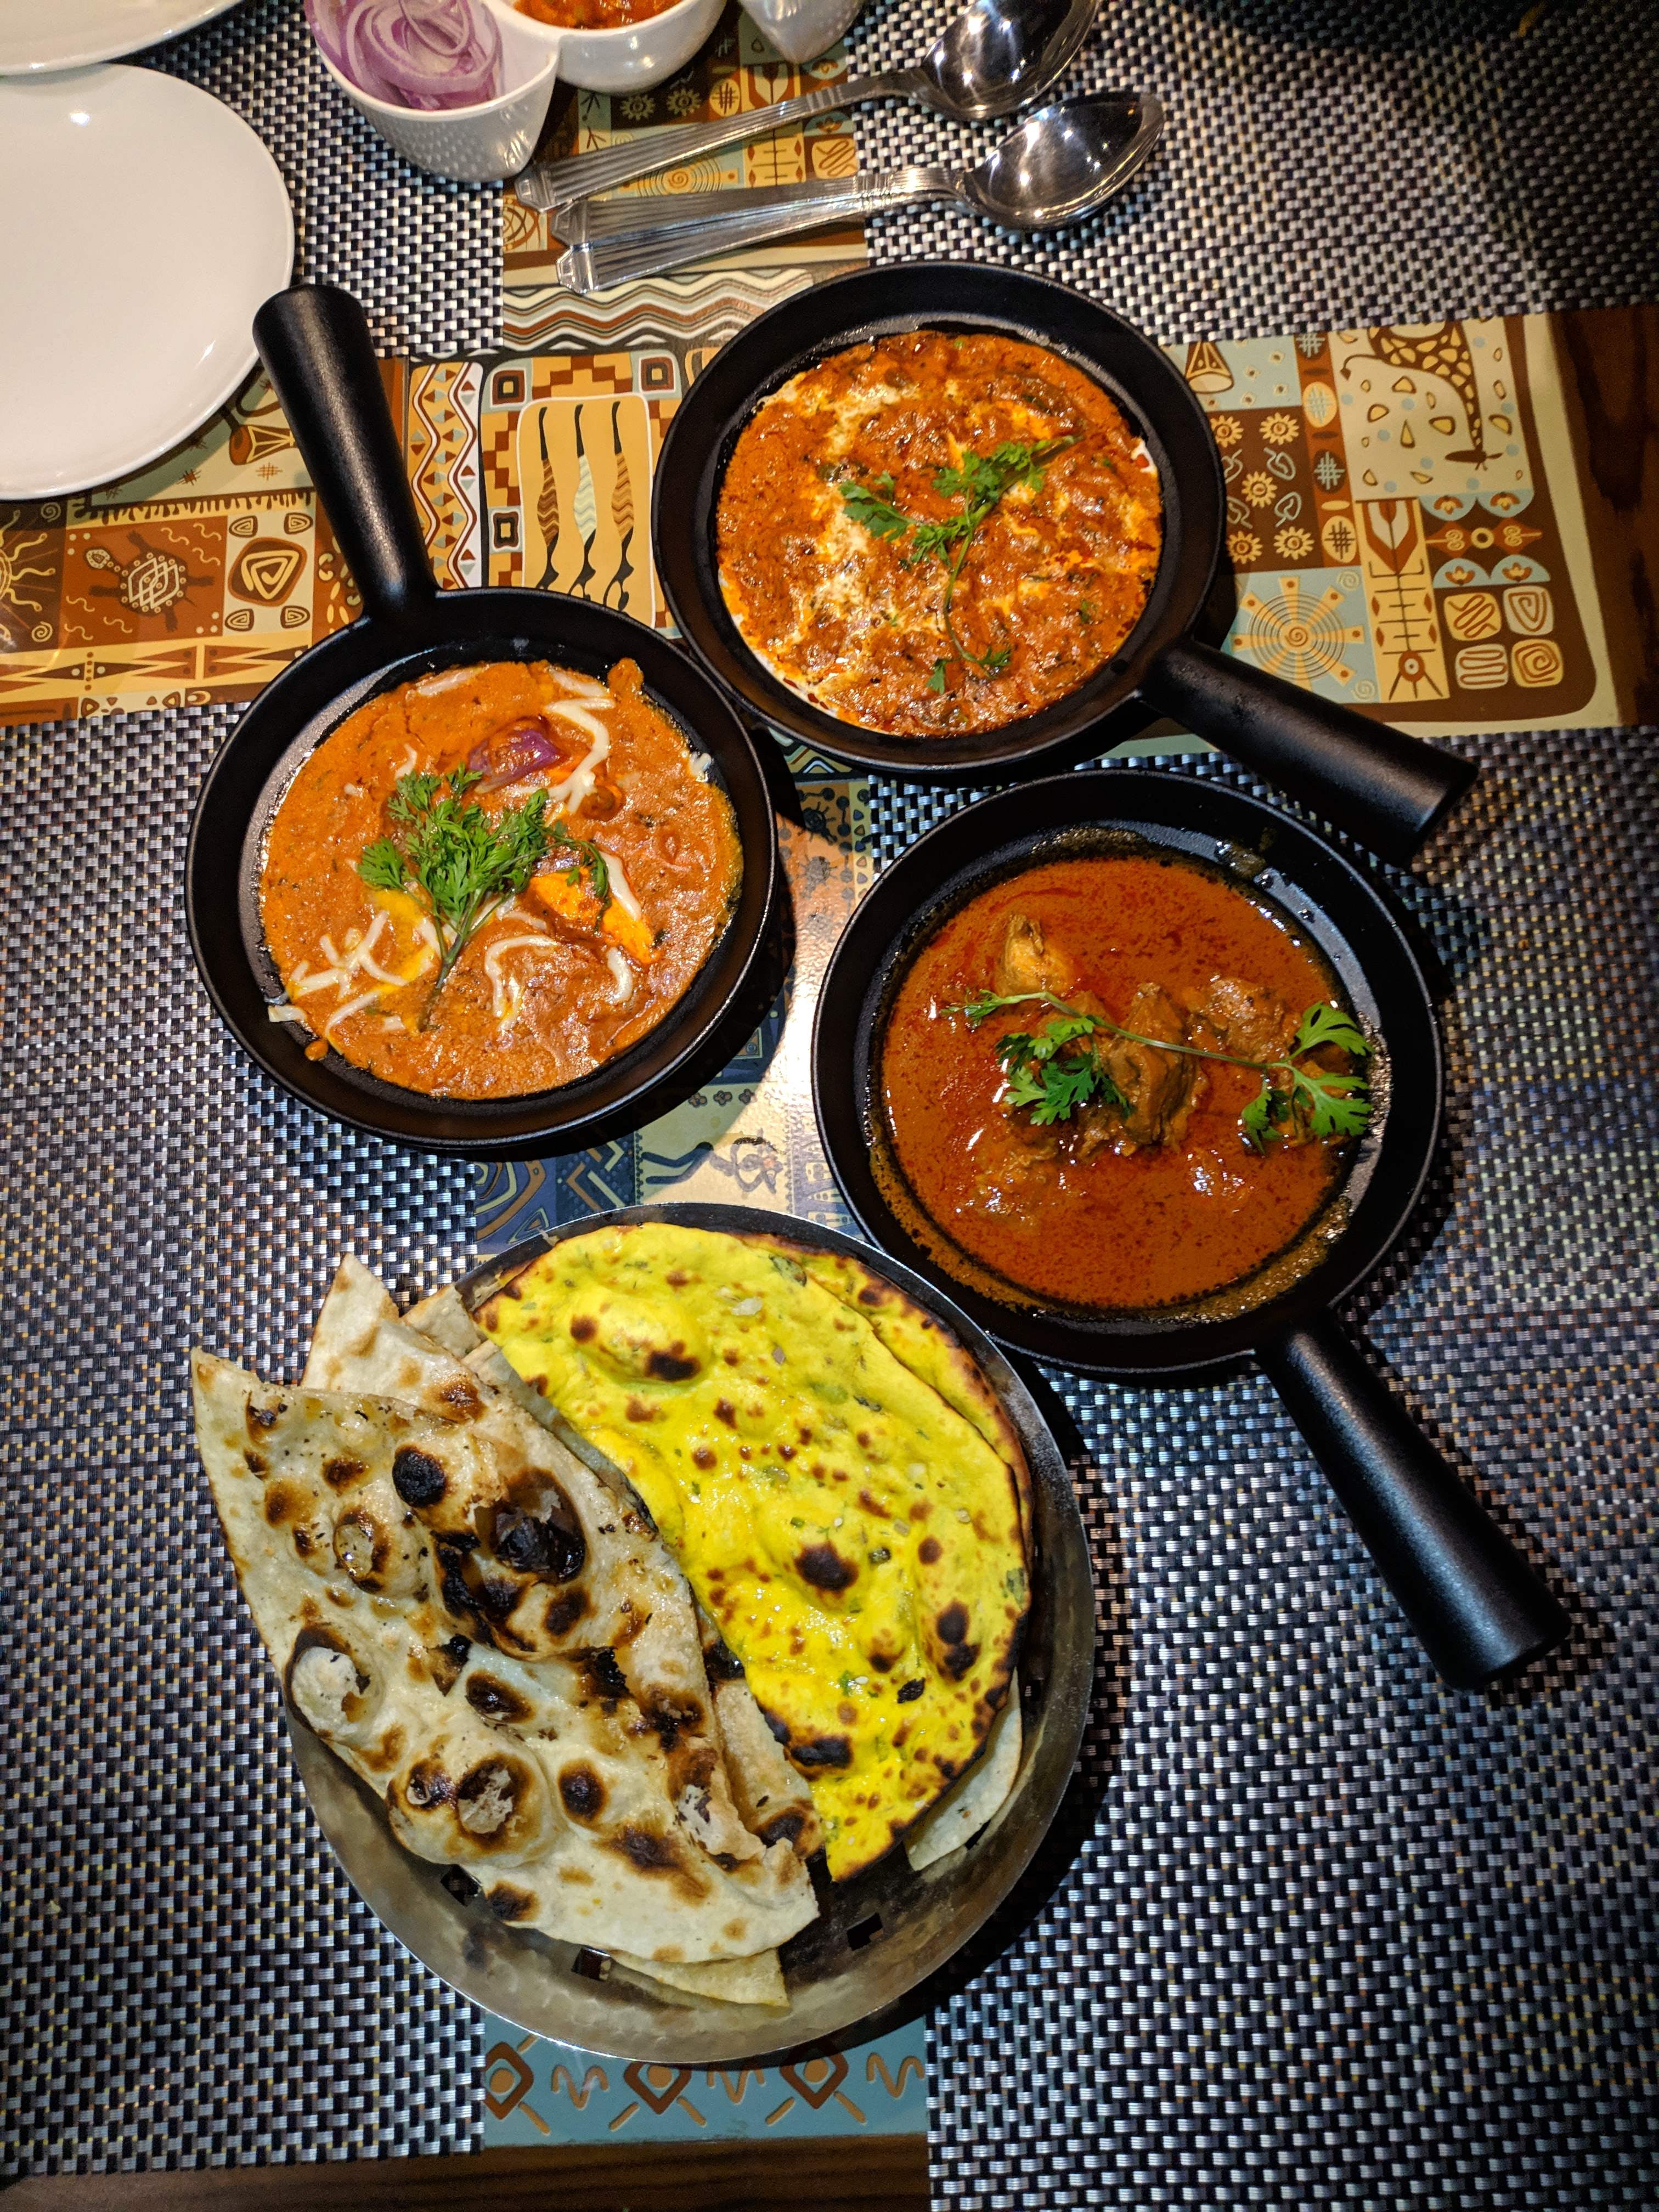 Dish,Food,Cuisine,Naan,Ingredient,Curry,Punjabi cuisine,Produce,Chapati,Meal